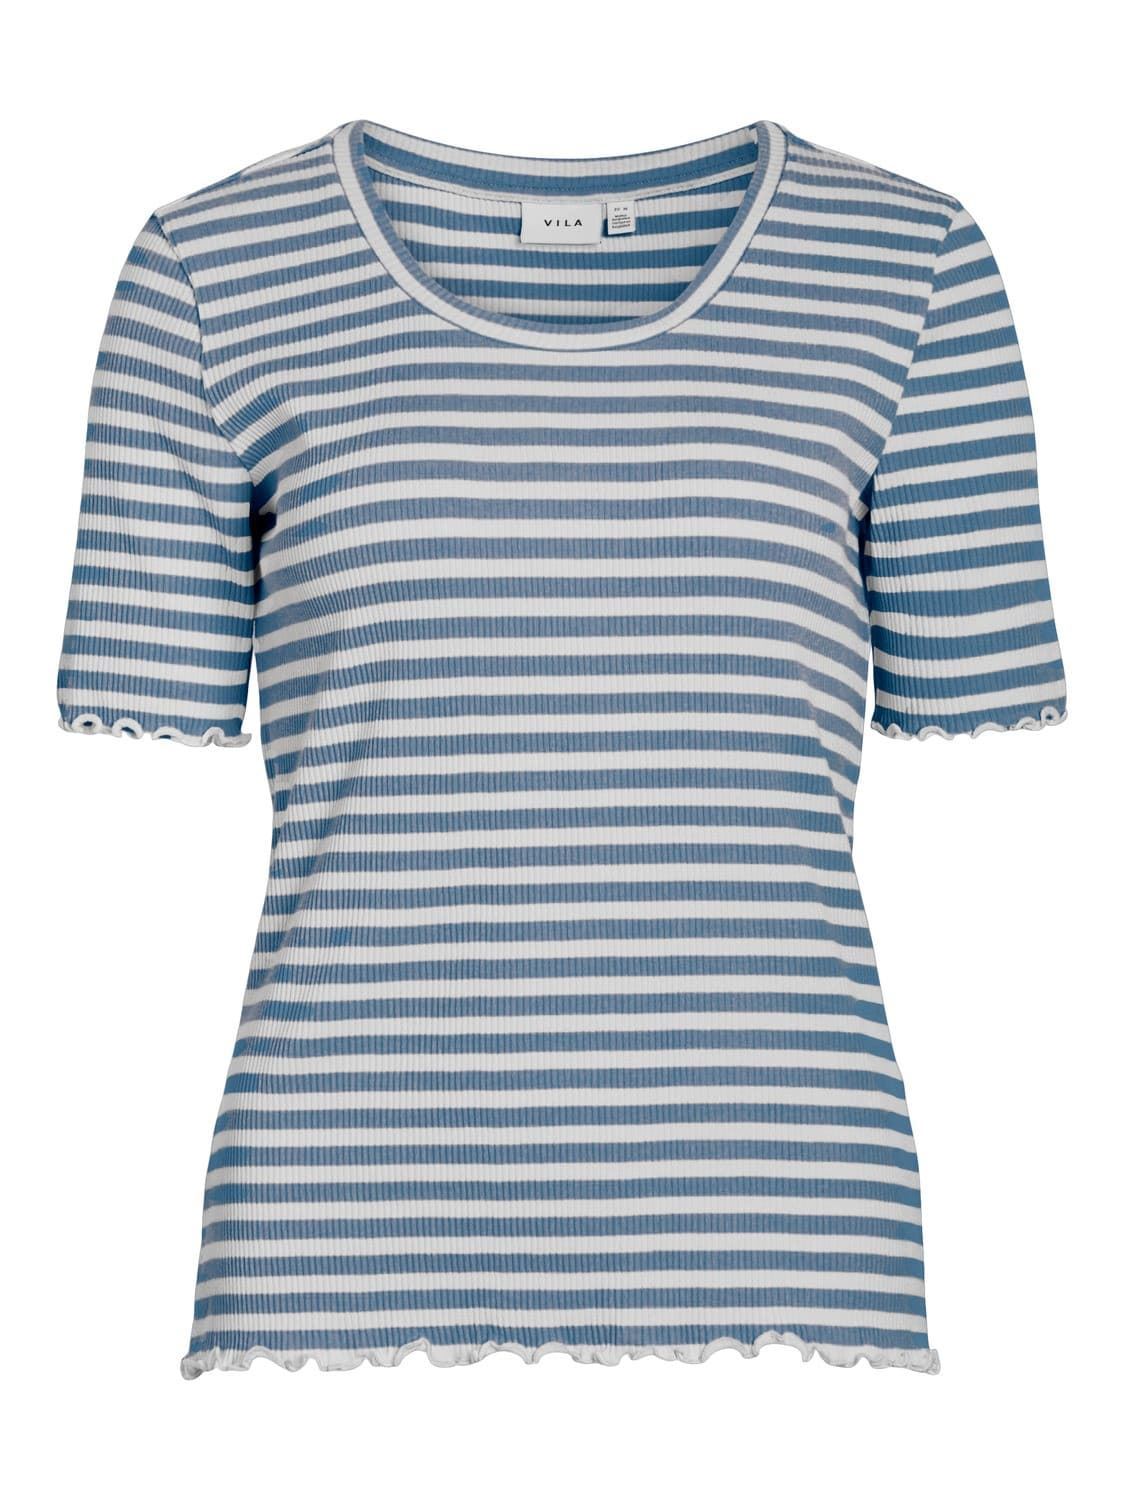 Camiseta manga corta azul vithessa - Imagen 1